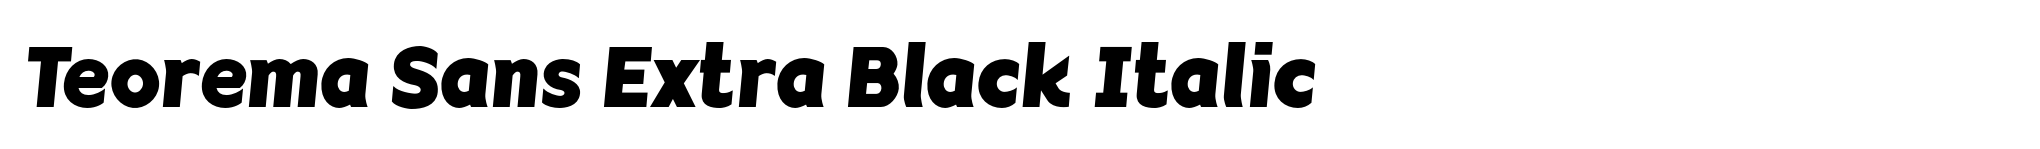 Teorema Sans Extra Black Italic image